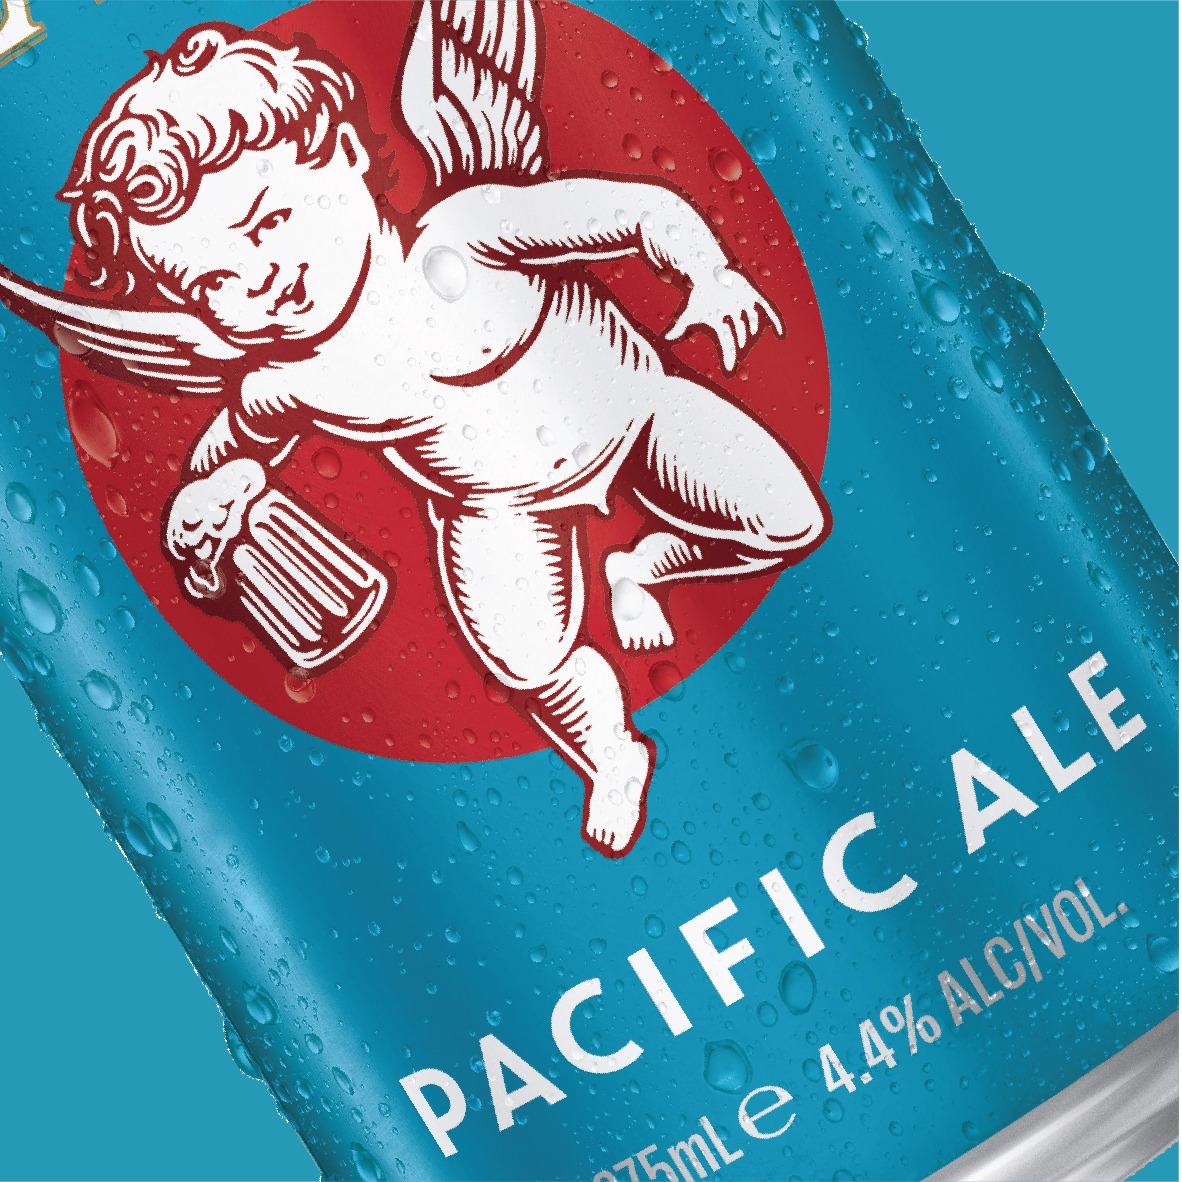 Pacific Beverages – Premium Beer Importer